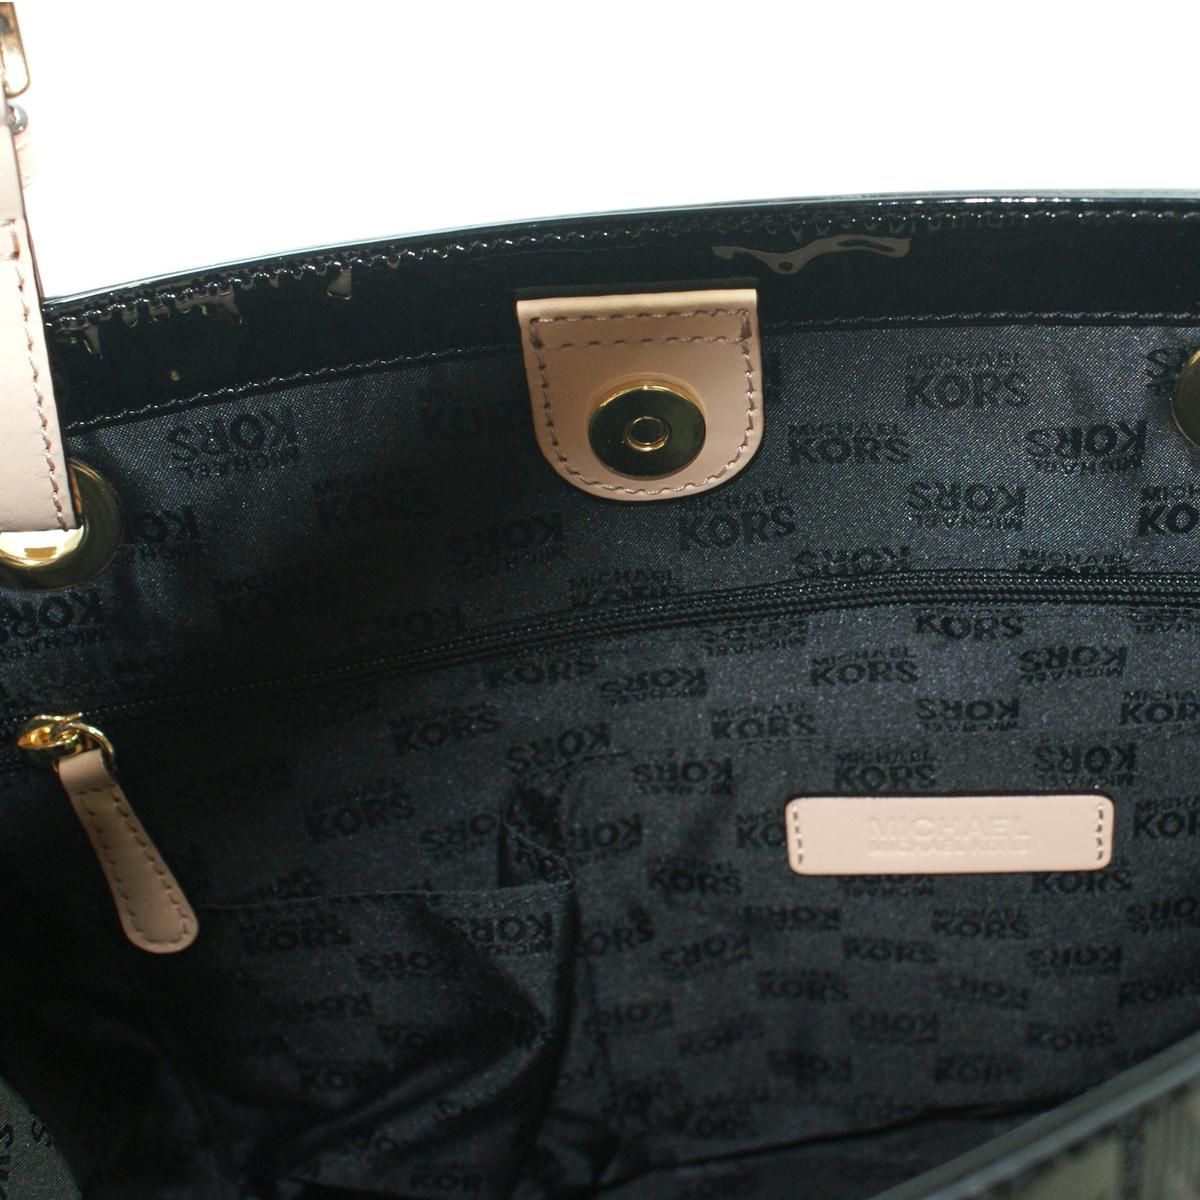 michael kors black patent leather handbag